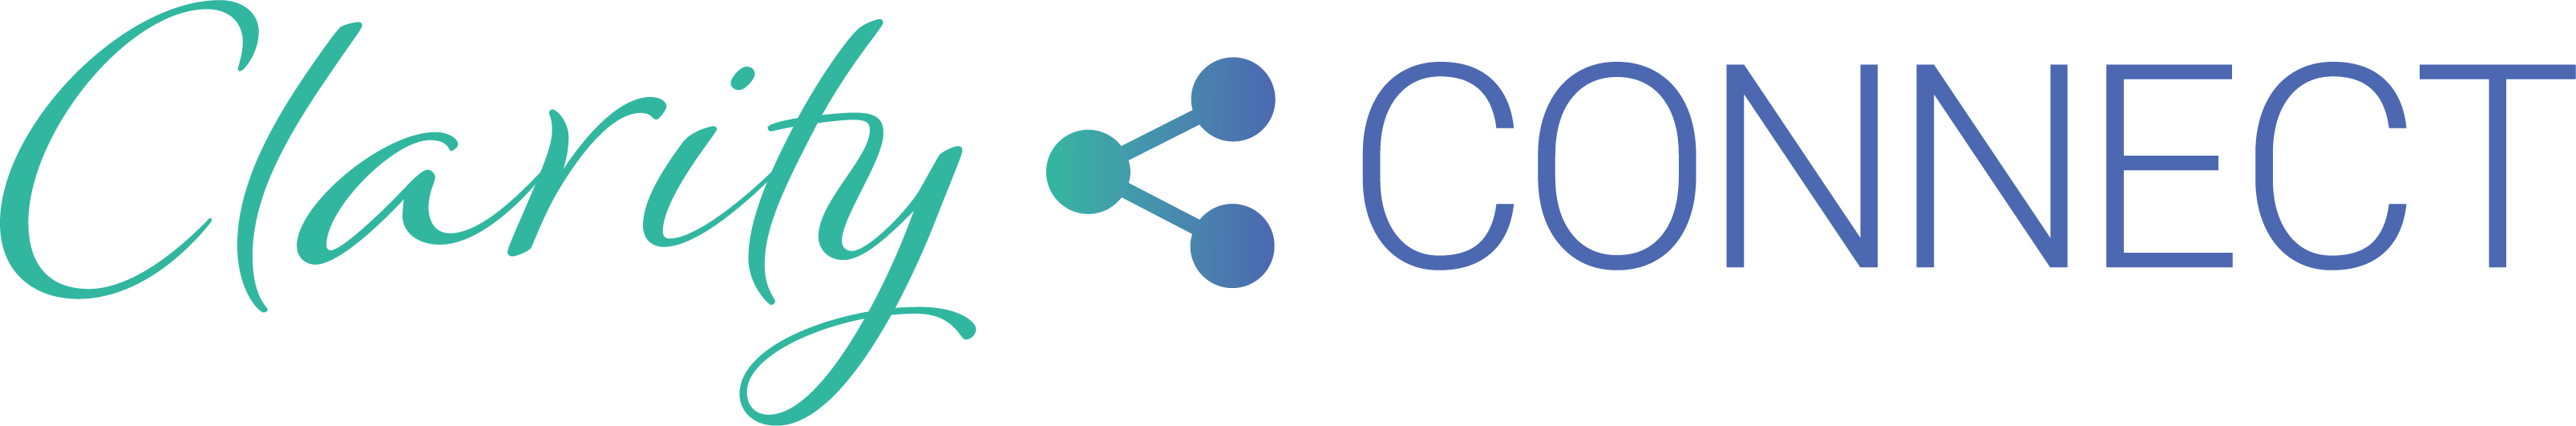 Clarity Connect Inc. logo